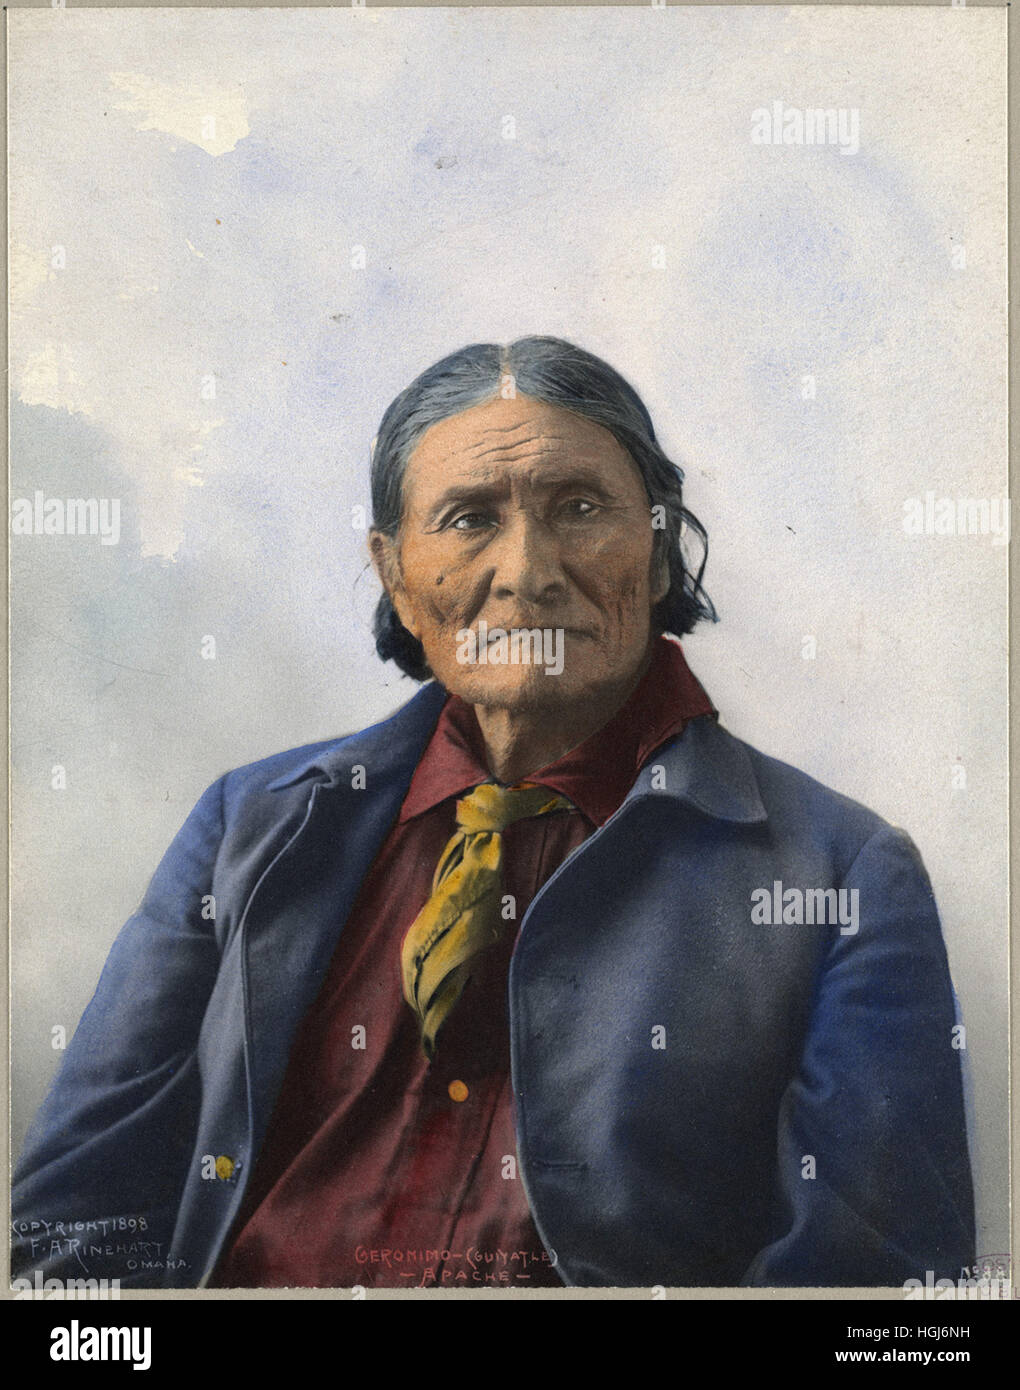 Geronimo (Guiyatle), Apache - 1898 Indian Congress - Foto: Frank A. Rinehart Stockfoto